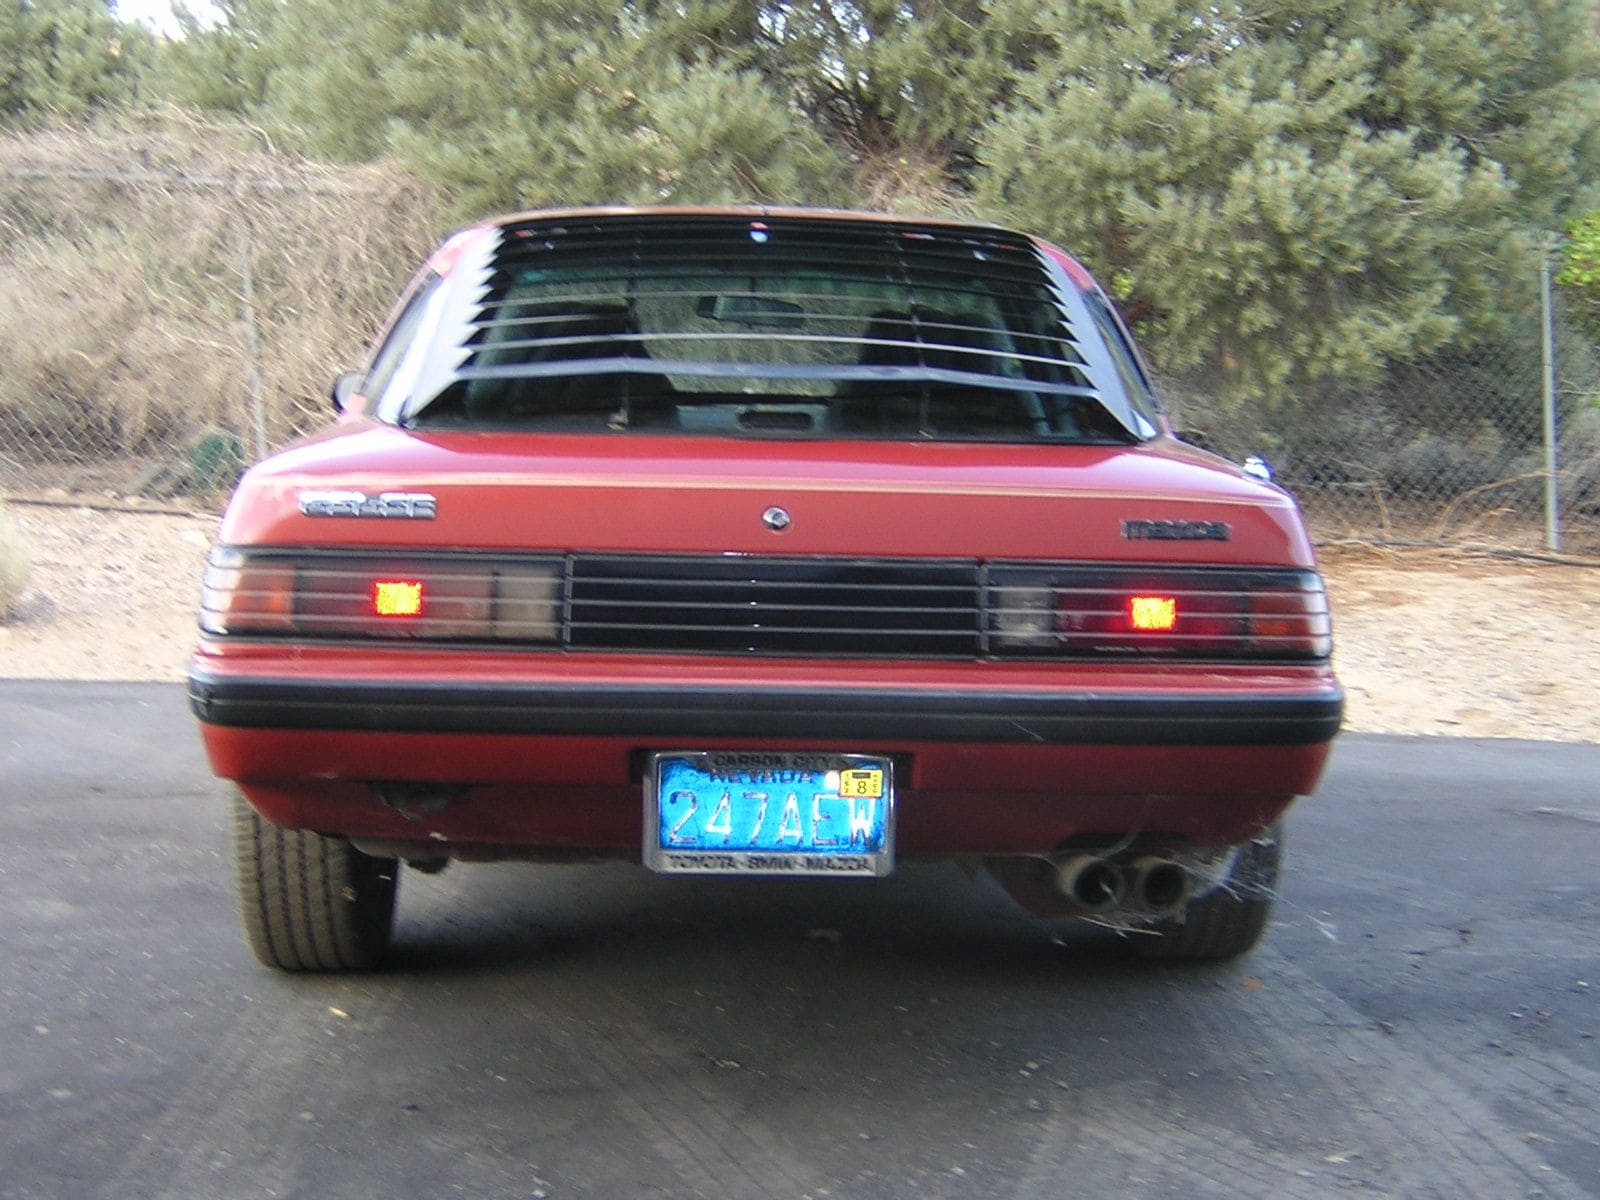 1984 Mazda RX-7 - 1984 RX-7 13B Engine Model N3 - Used - VIN JM1FB3323E0836444 - 64,370 Miles - Coupe - Orange - Gradnerville, NV 89410, United States